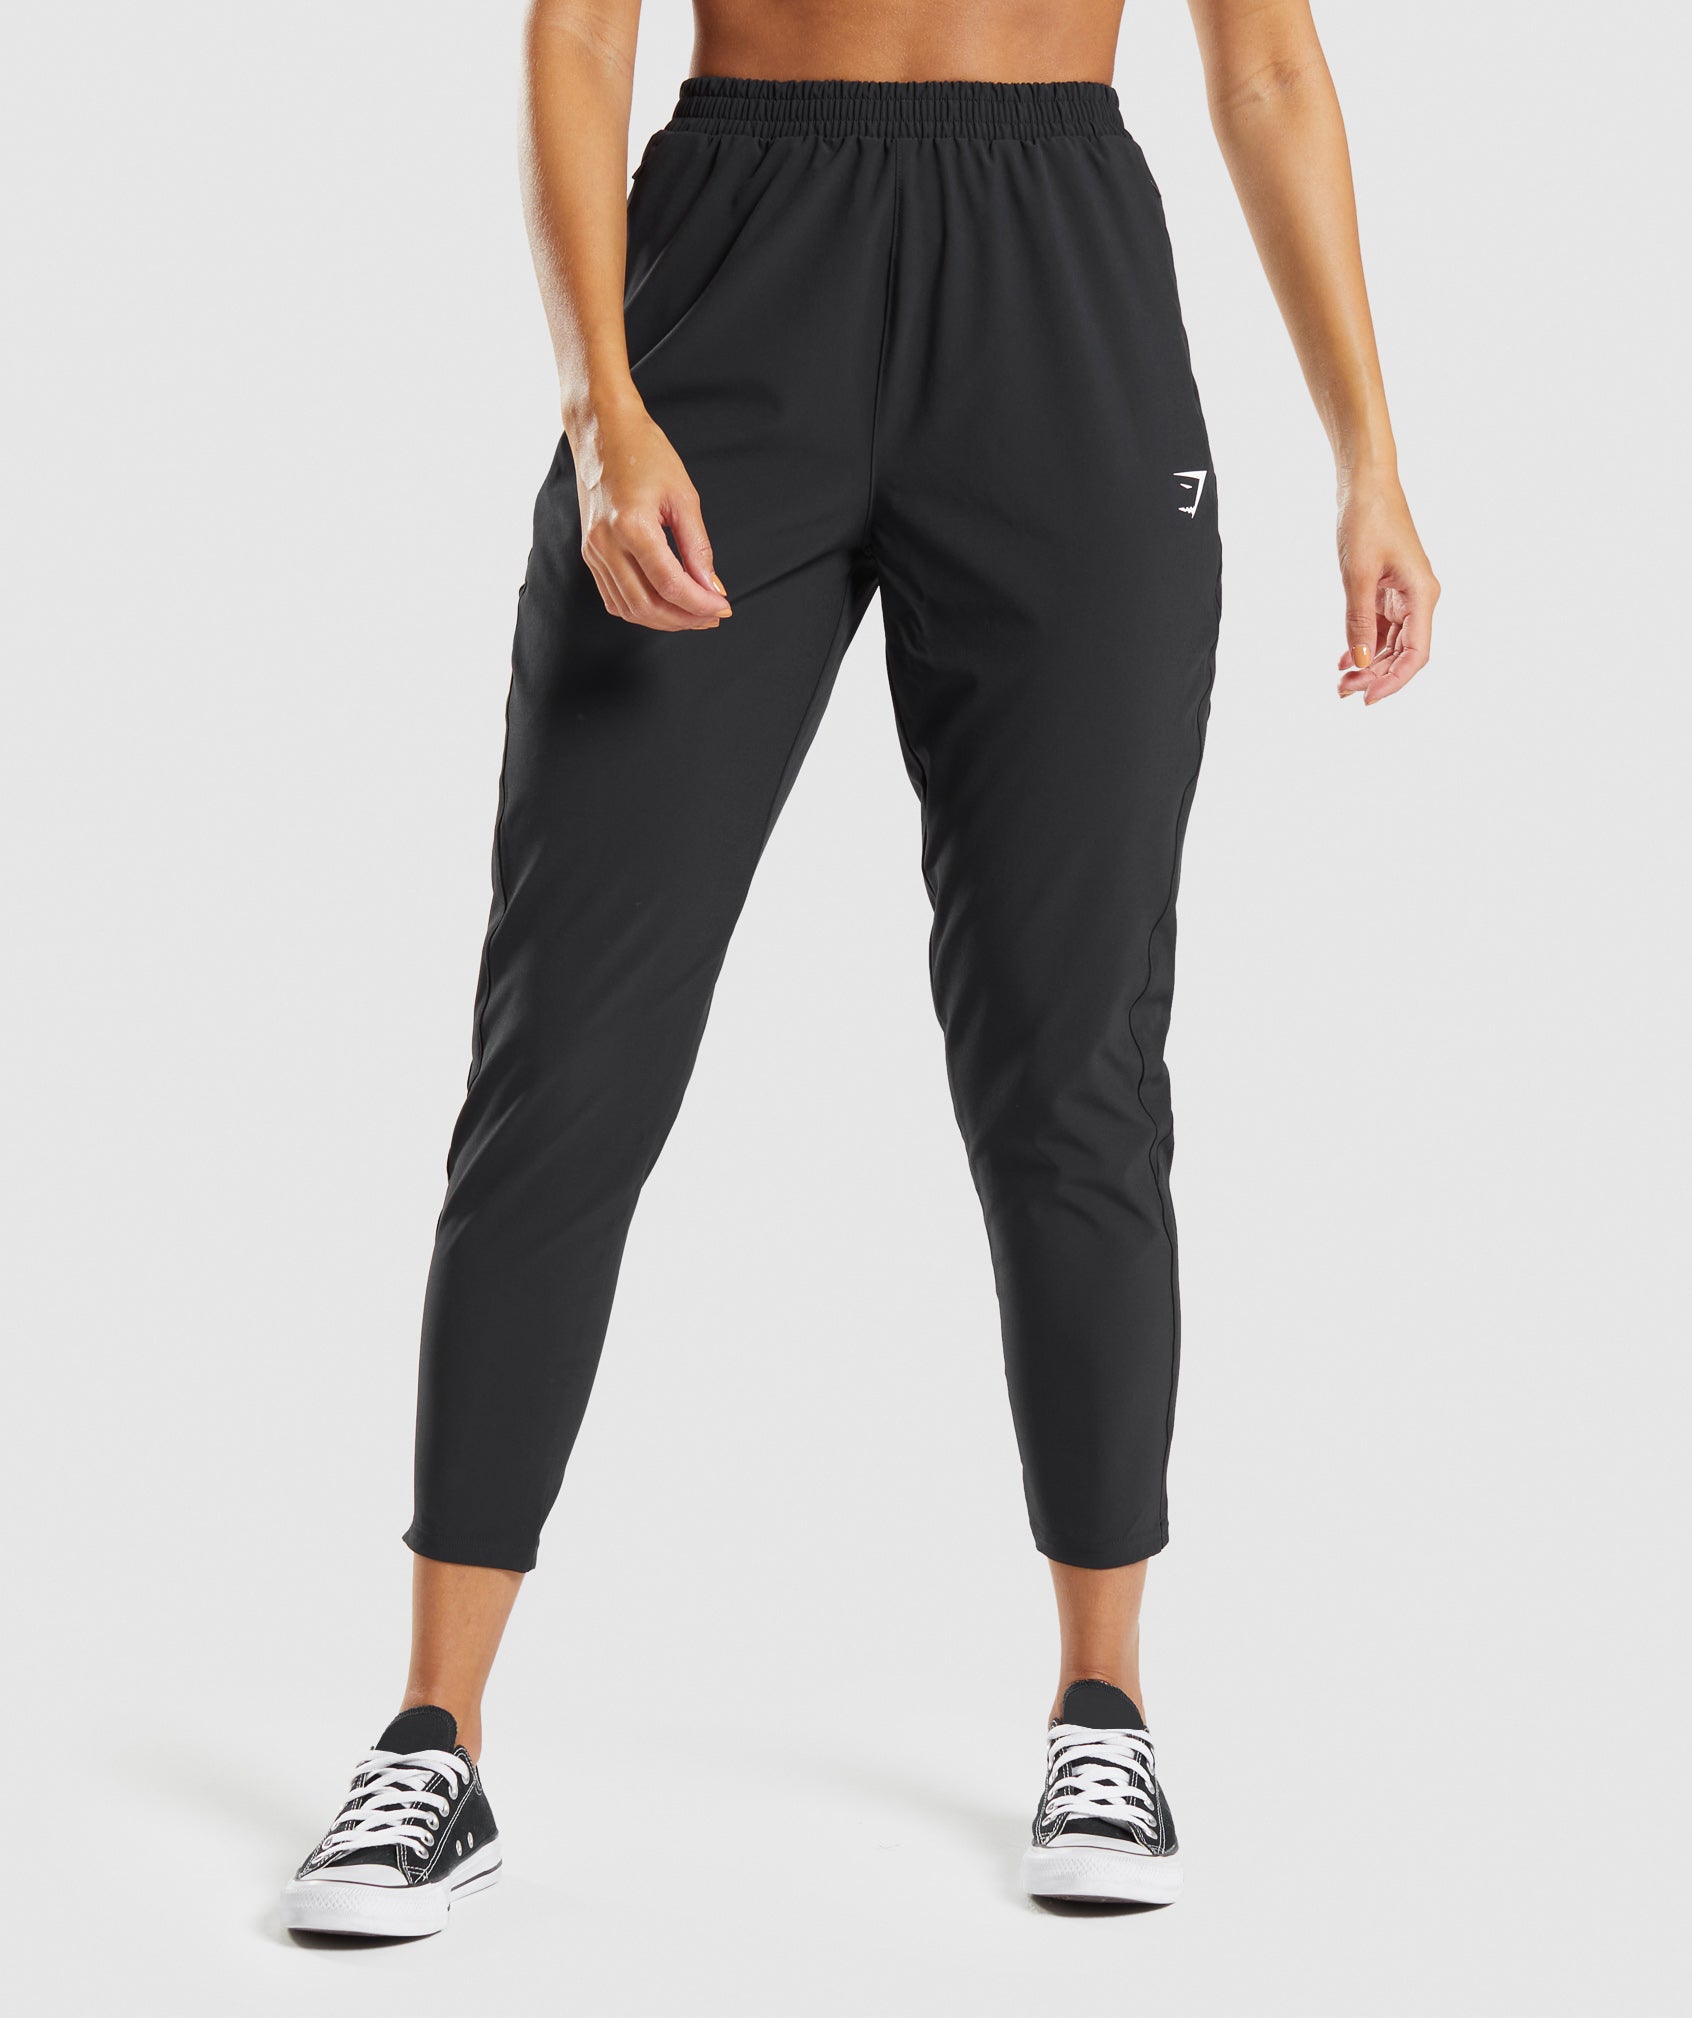 CAICJ98 Sweatpants For Men Mens Zip Joggers Pants - Casual Gym Workout Track  Pants Comfortable Slim Fit Tapered Sweatpants with Pockets Black,XL -  Walmart.com